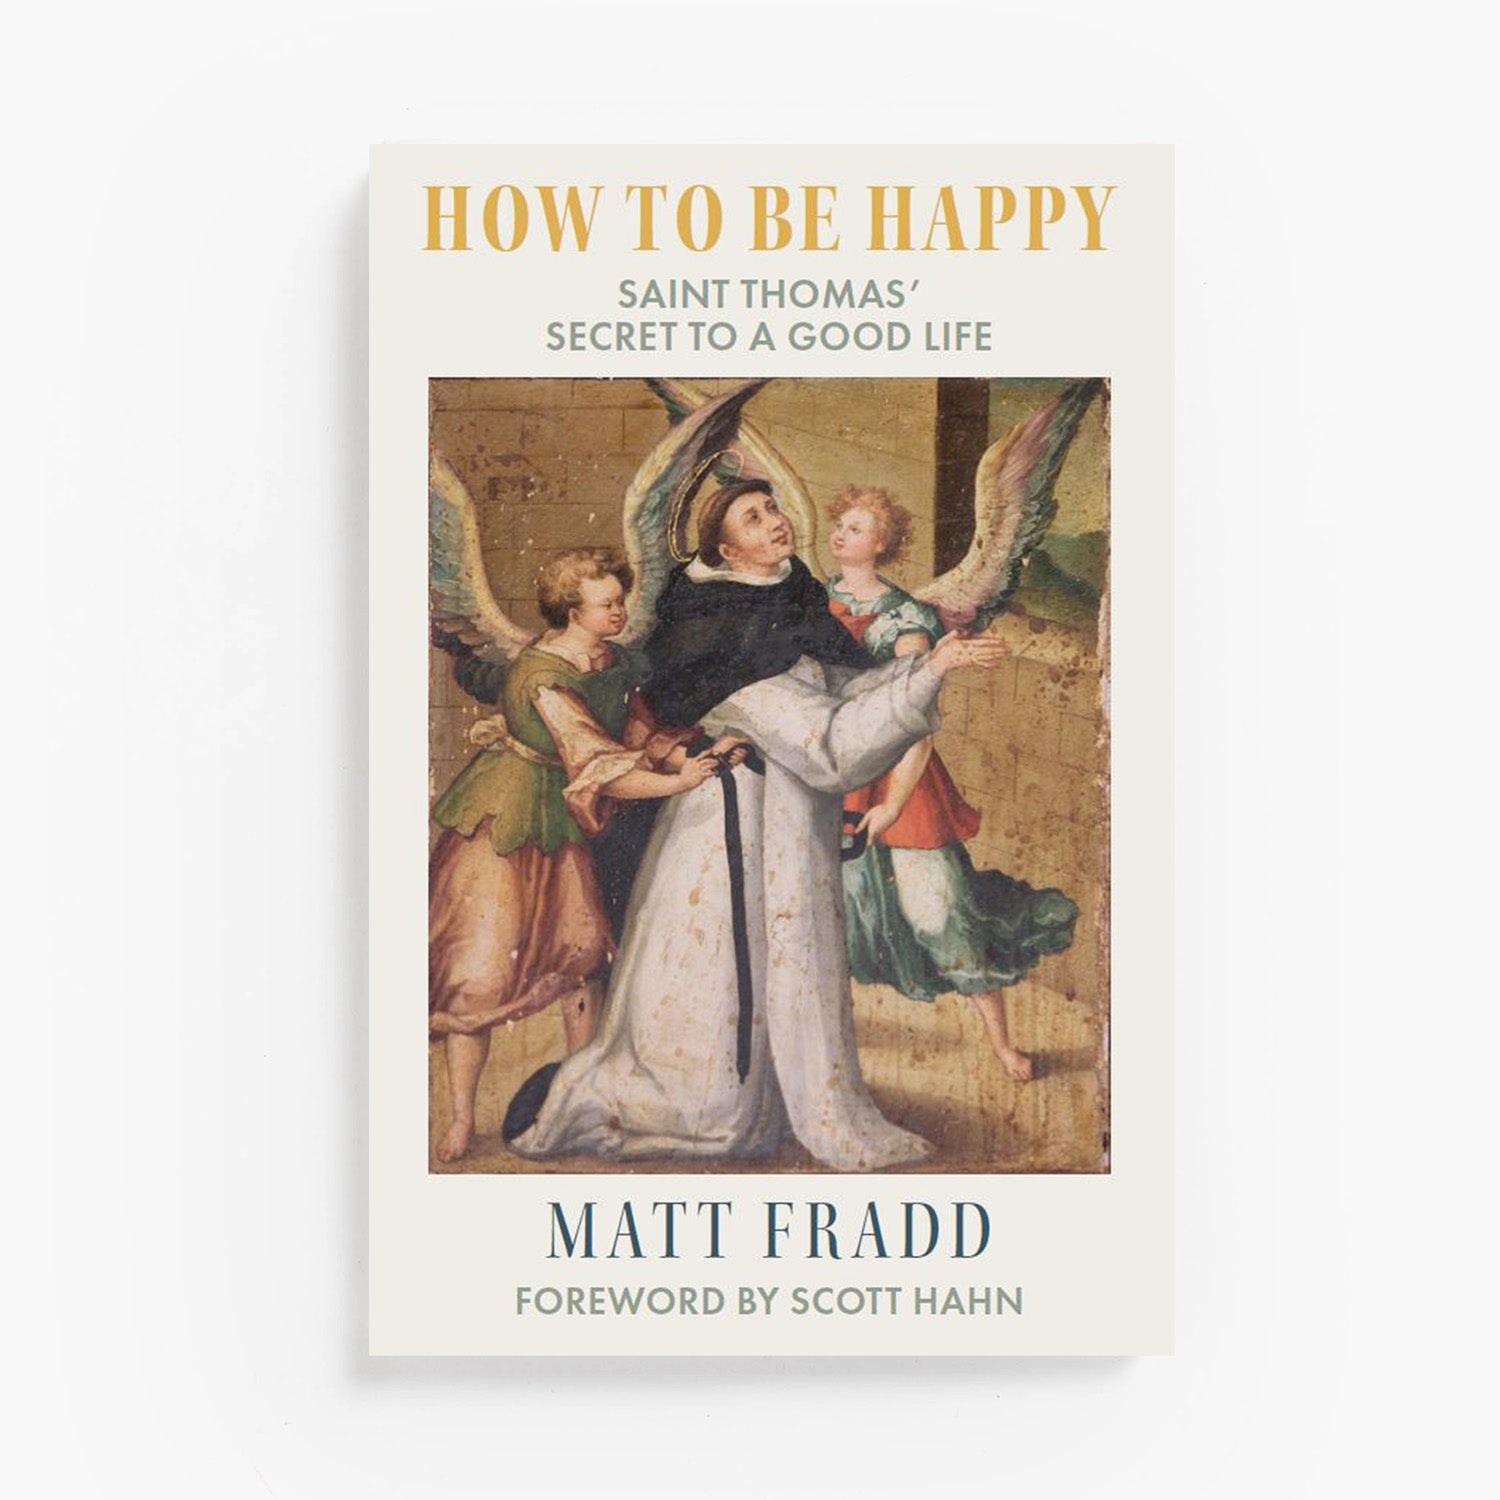 How to Be Happy: Saint Thomas’ Secret to a Good Life